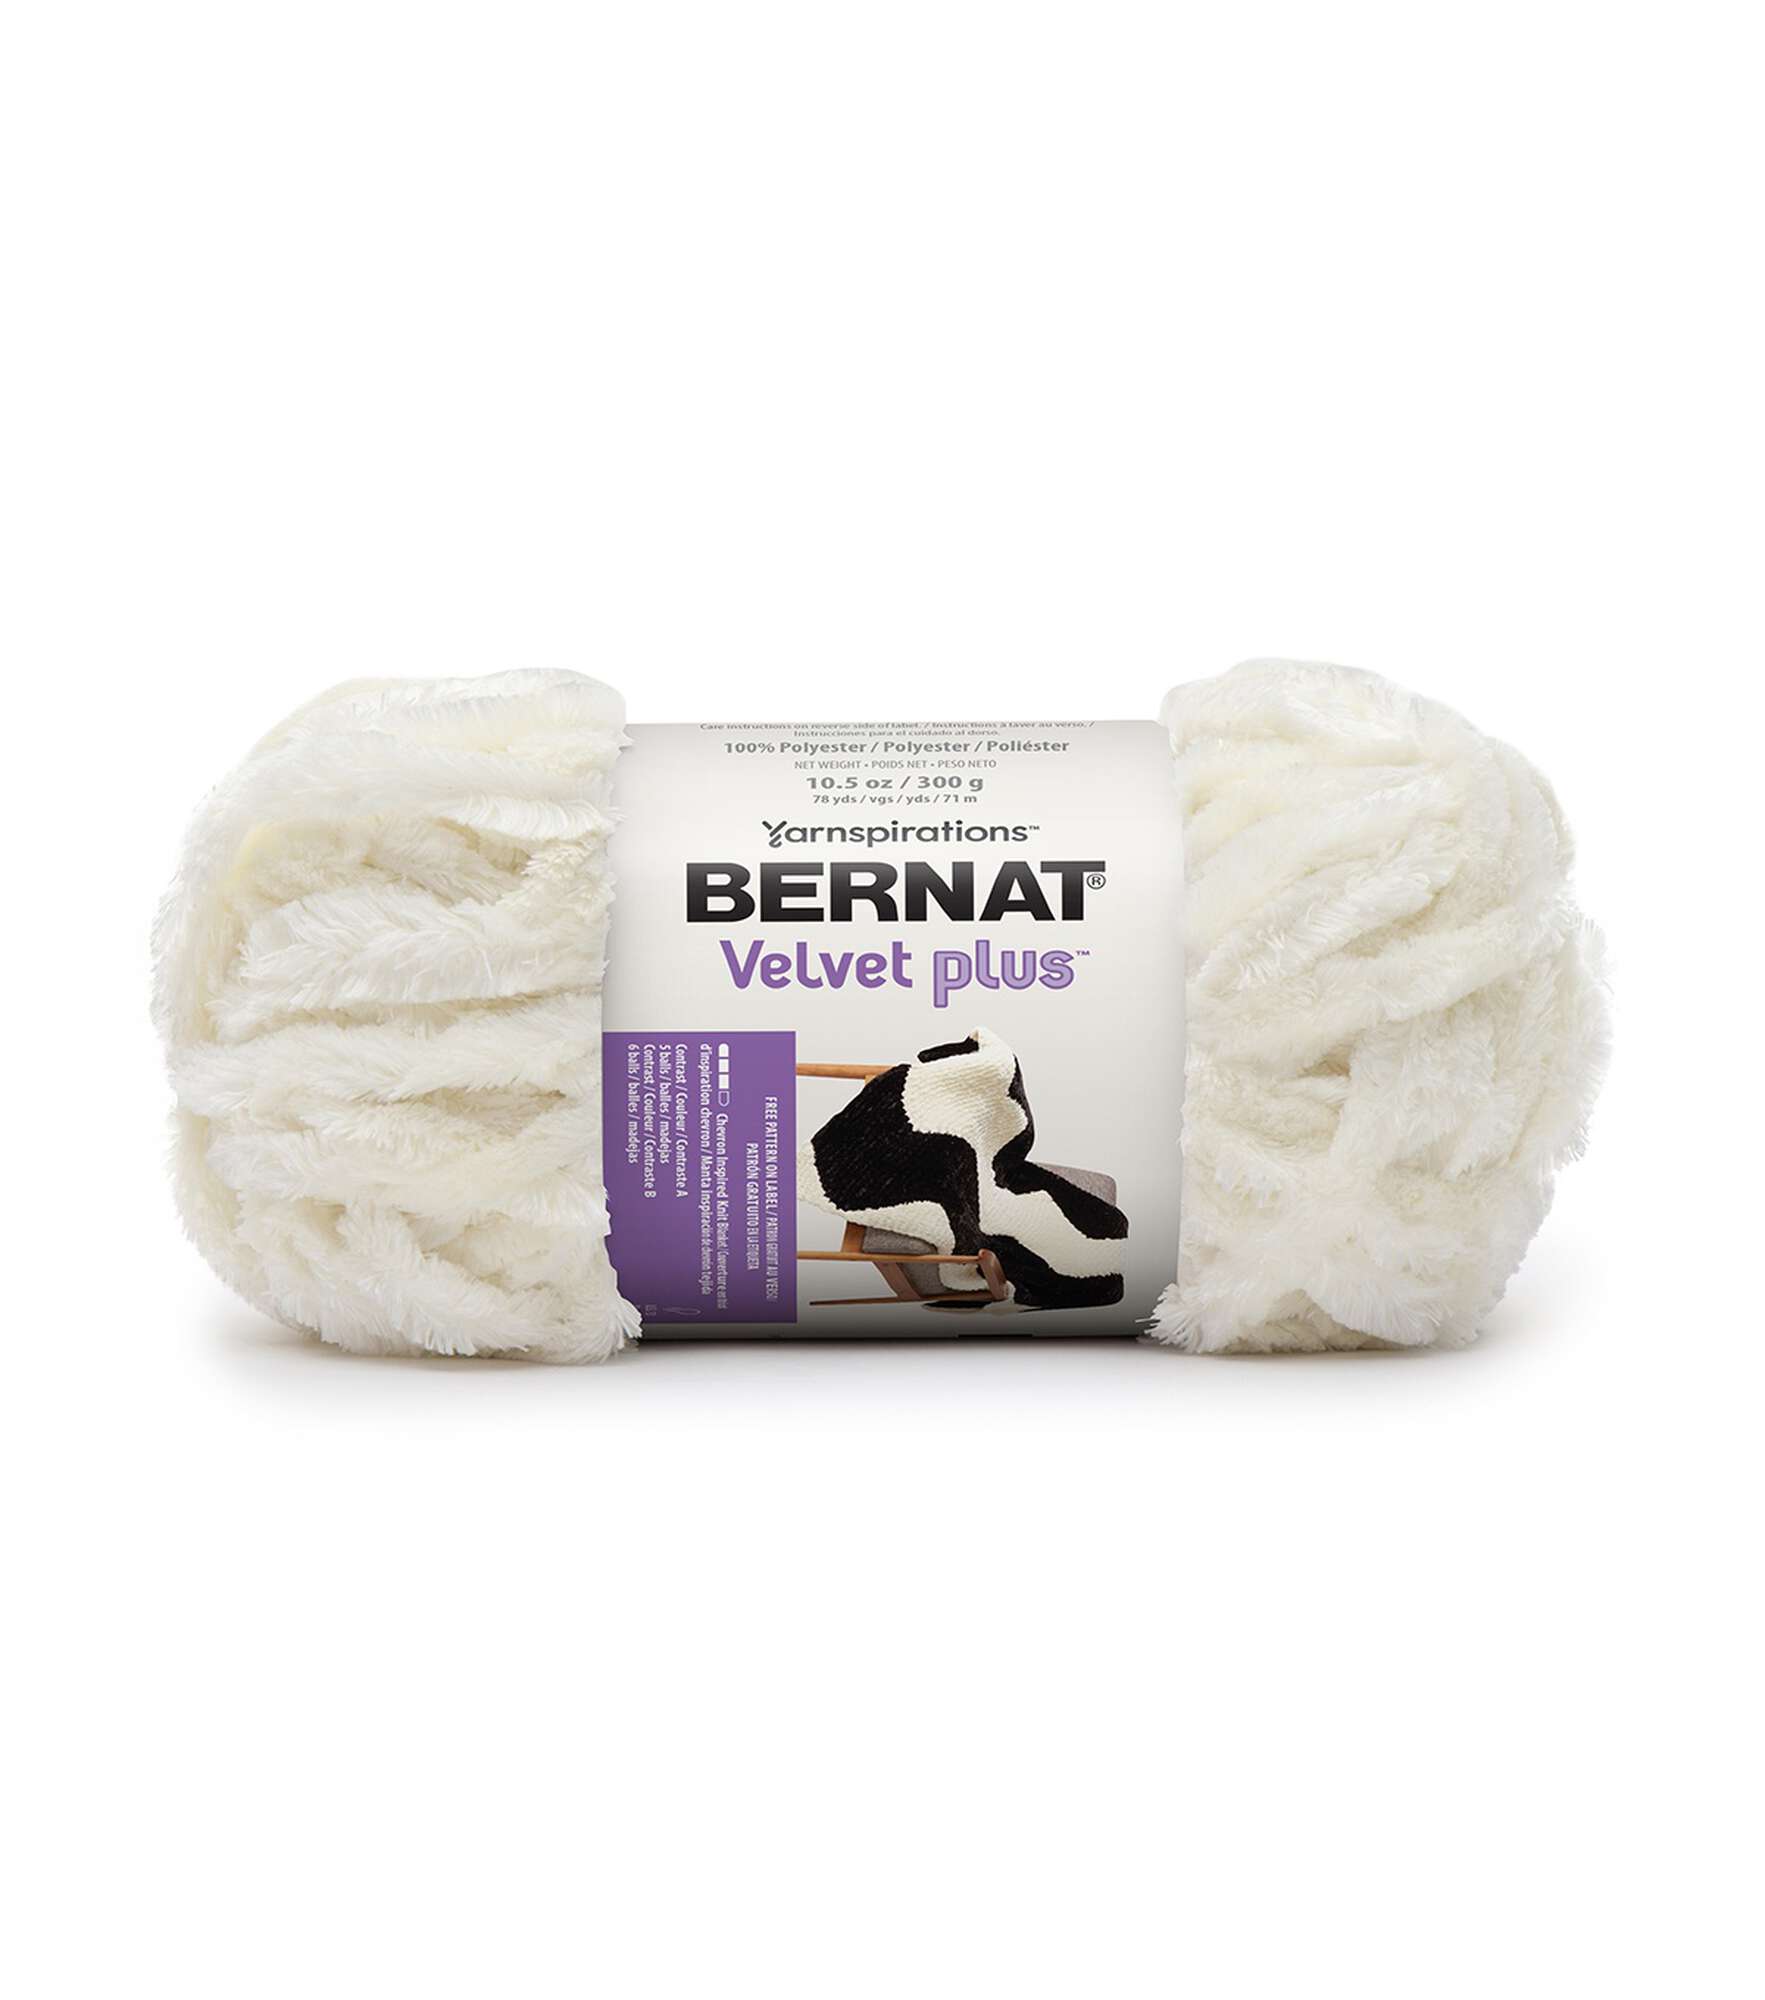 Bernat Velvet Plus Yarn, Yarnspirations